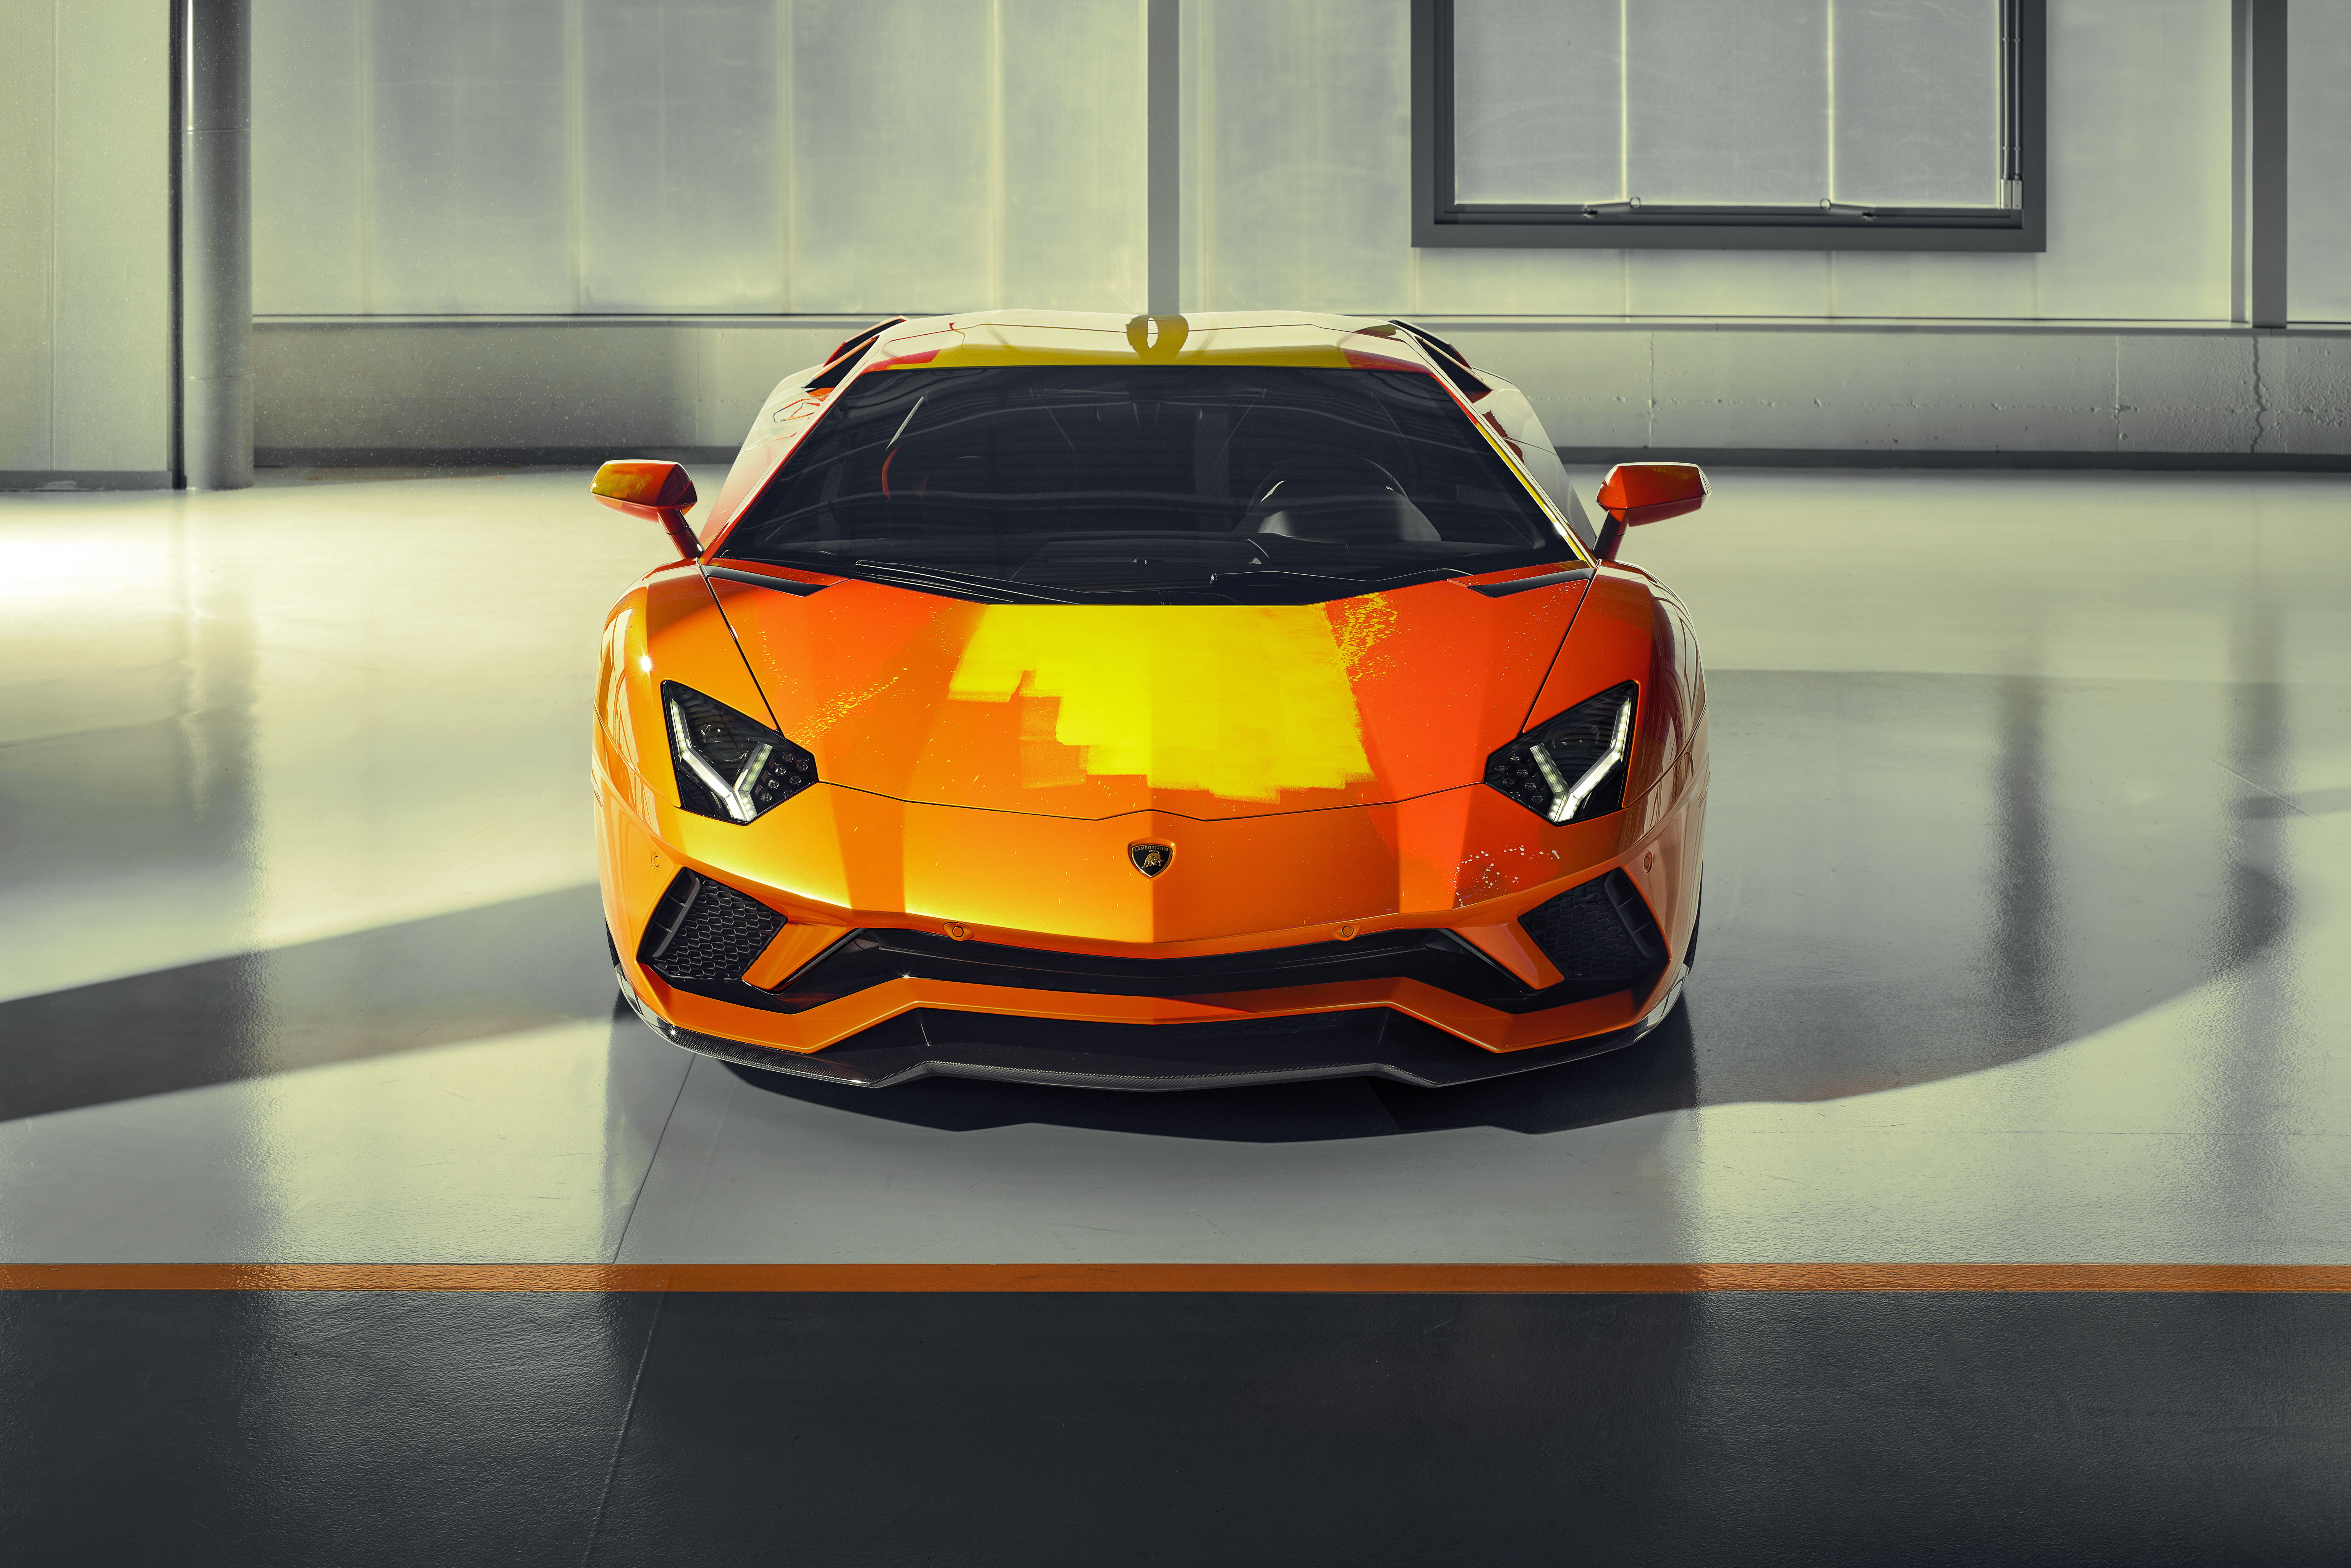 2019 Lamborghini Aventador S Front View, HD Cars, 4k ...